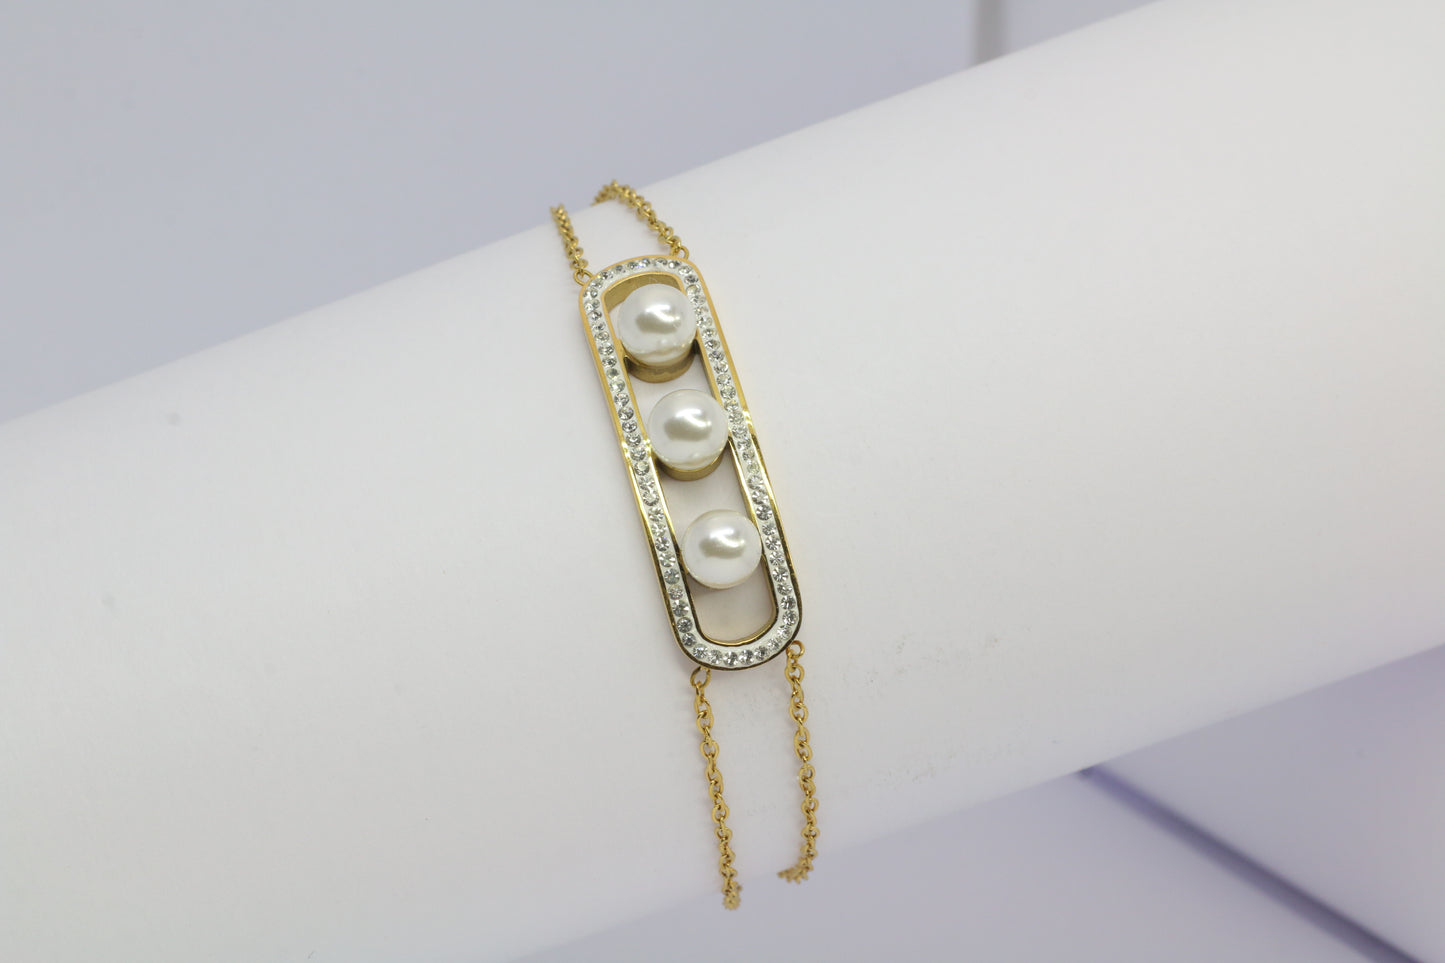 Bracelet avec strass et 3 perles blanches 24